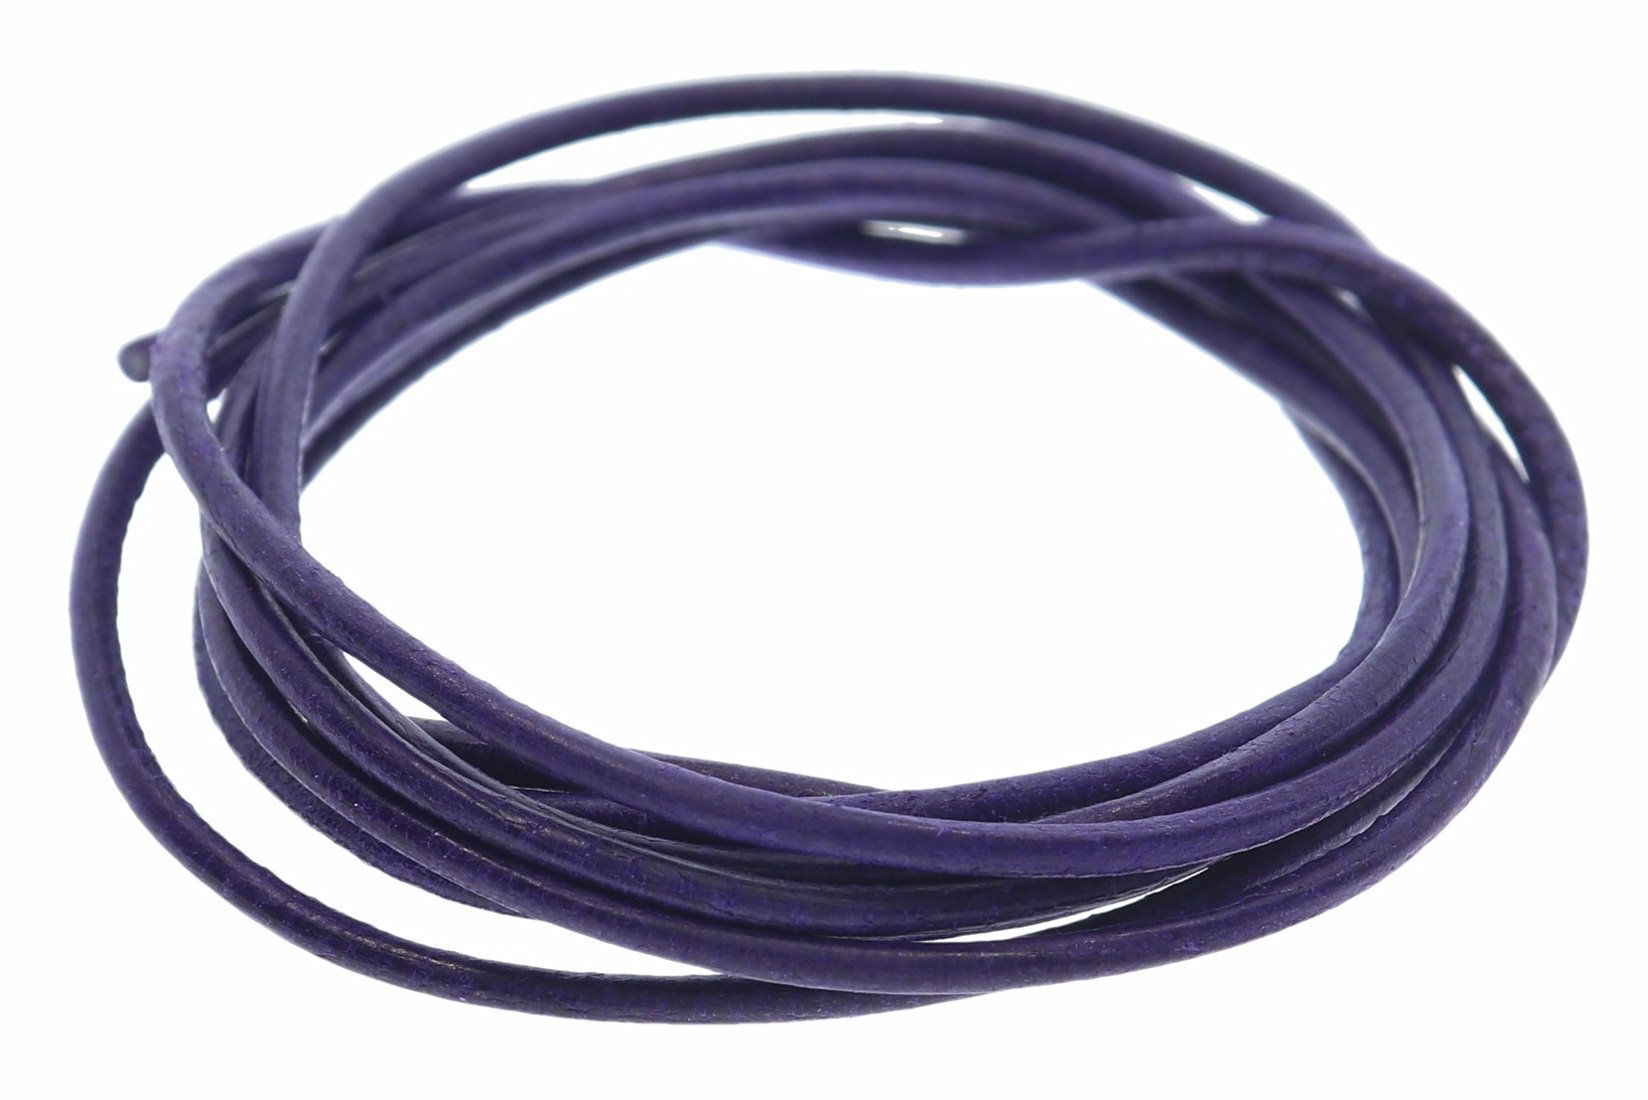 Lederband violett -  Lederbänder Lederriemen Lederschnur 1.5mm Ø - 100cm L105